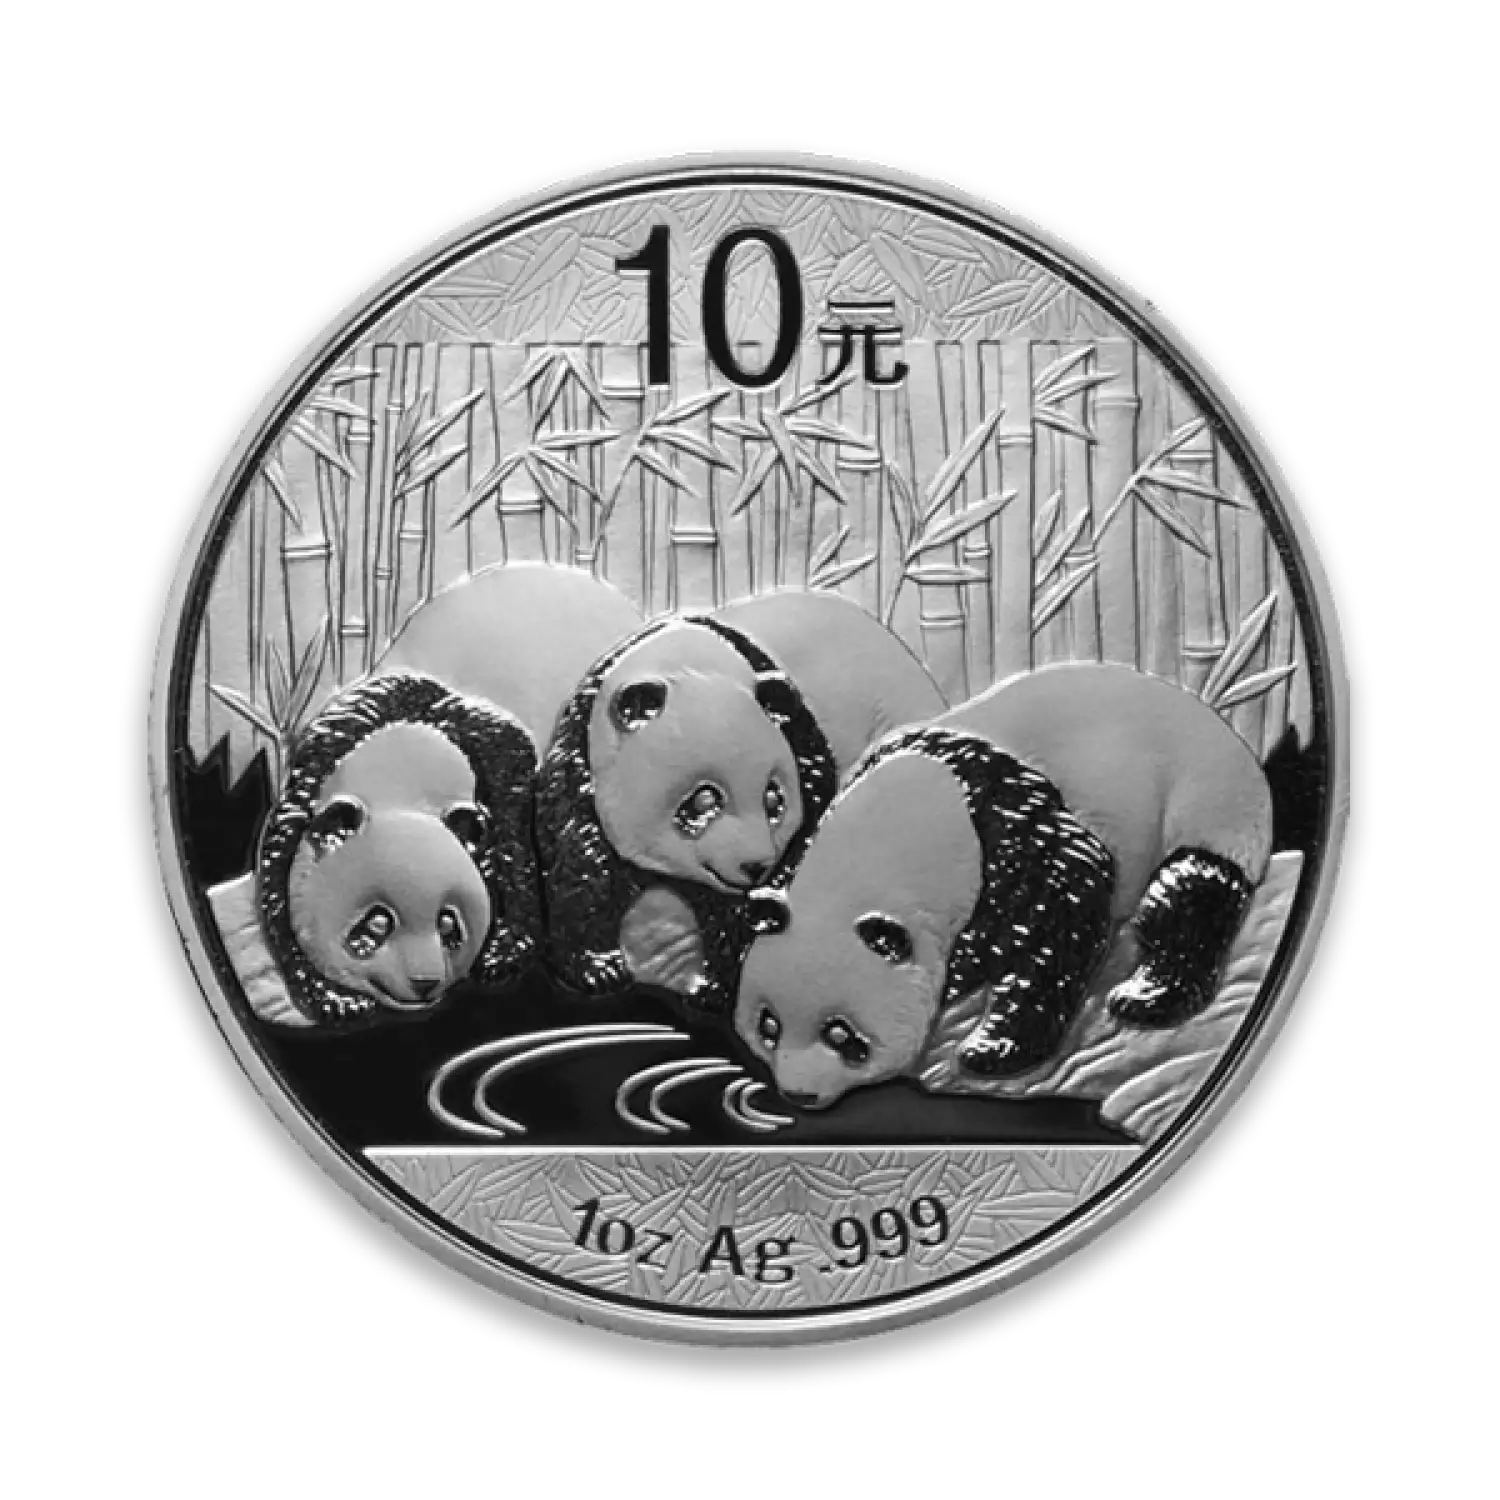 1 oz Silver Chinese Panda Coin | Gulfcoast Coin & Jewelry 